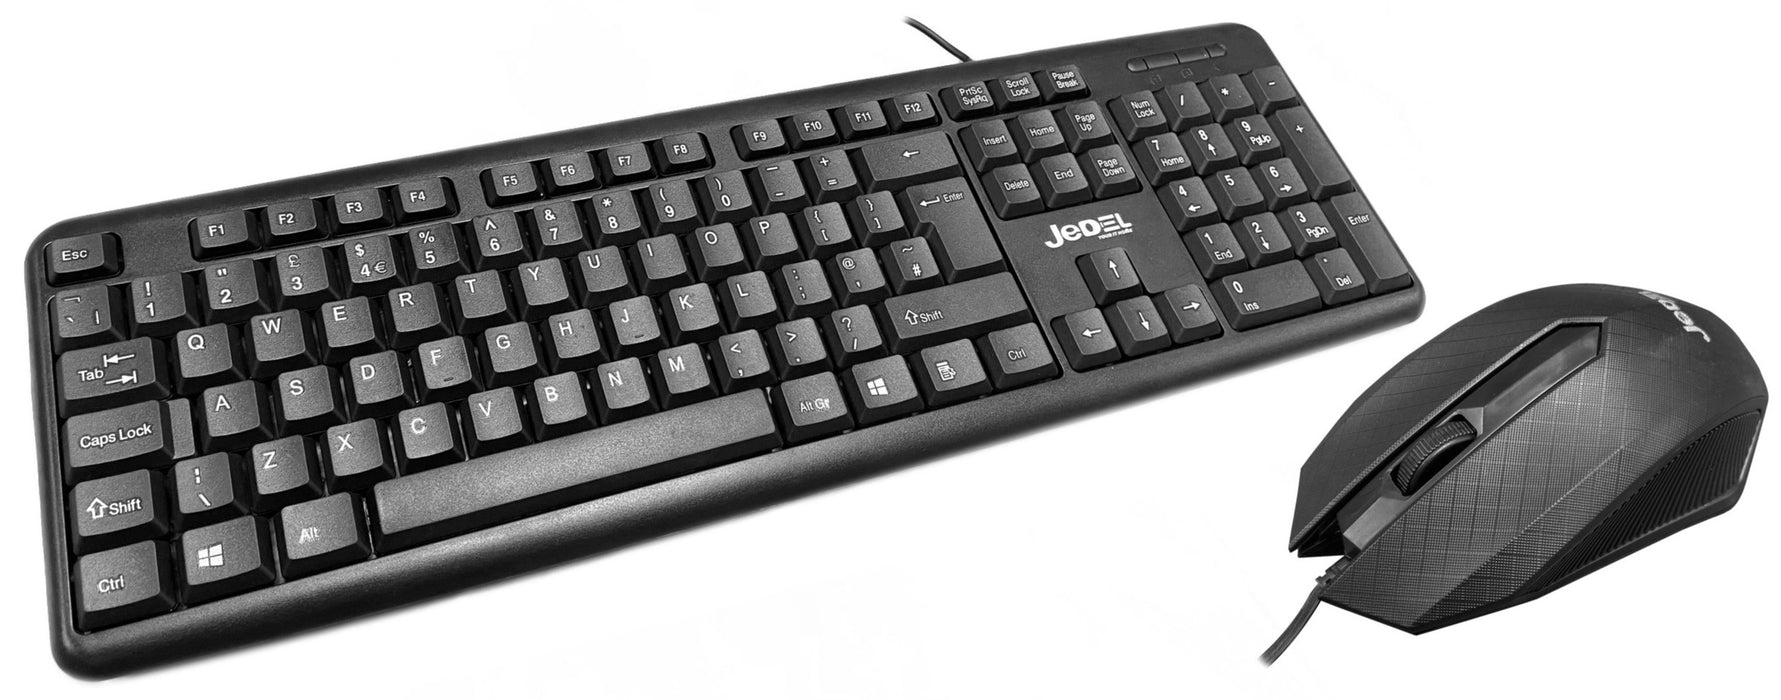 Jedel G11 Standard Wired USB Keyboard & Optical Mouse Bundle Set - UK Layout - KB-JED-G11/COMBO